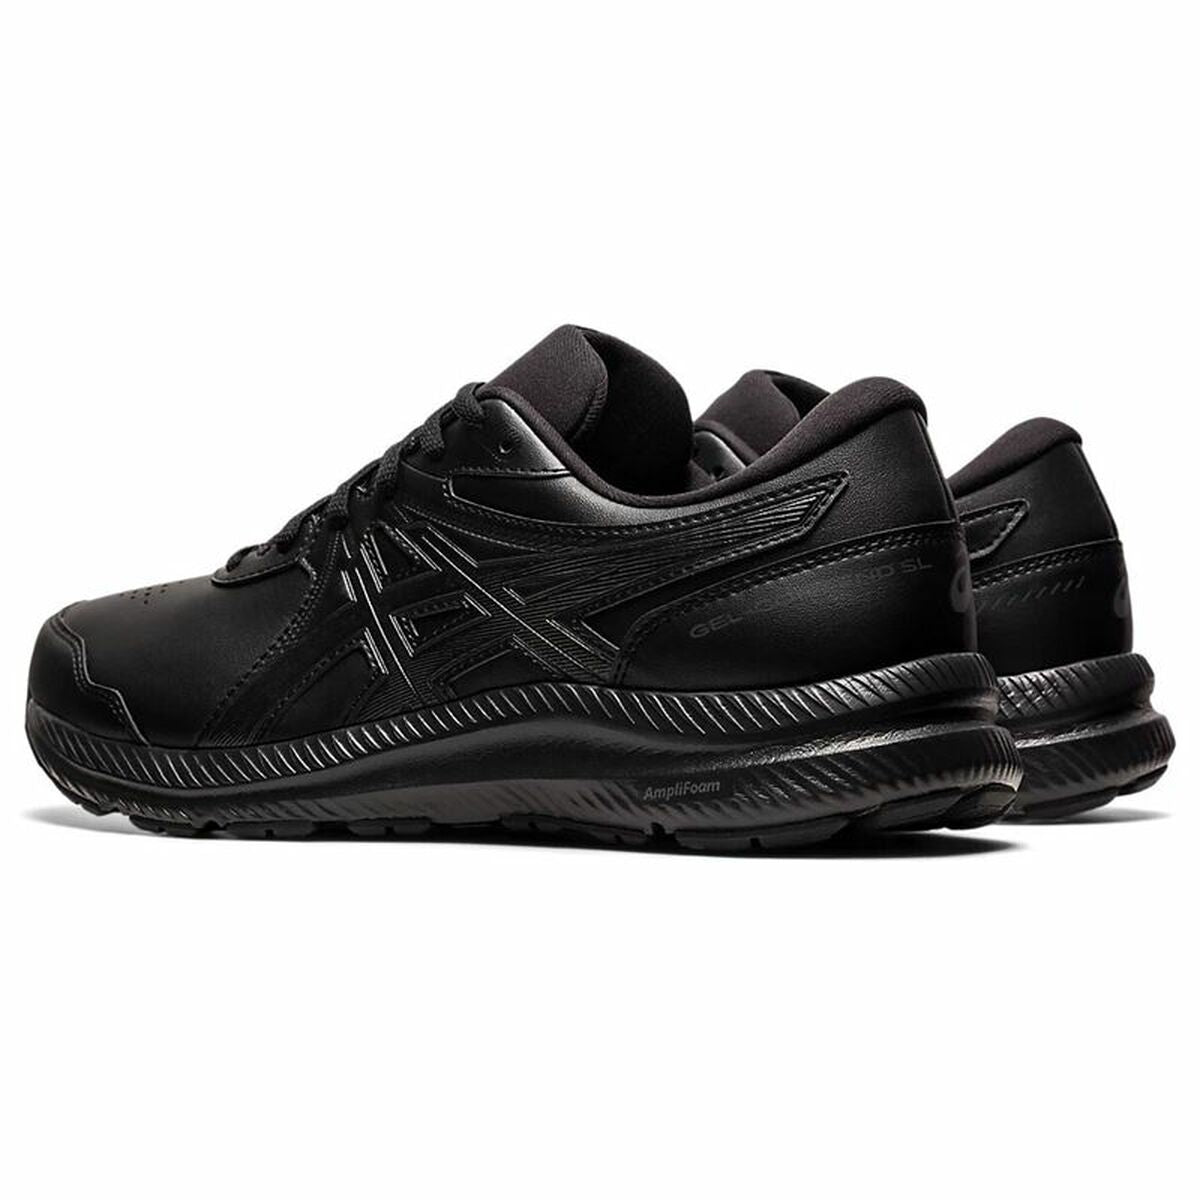 Running Shoes for Adults Asics GEL-Contend SL Black Men